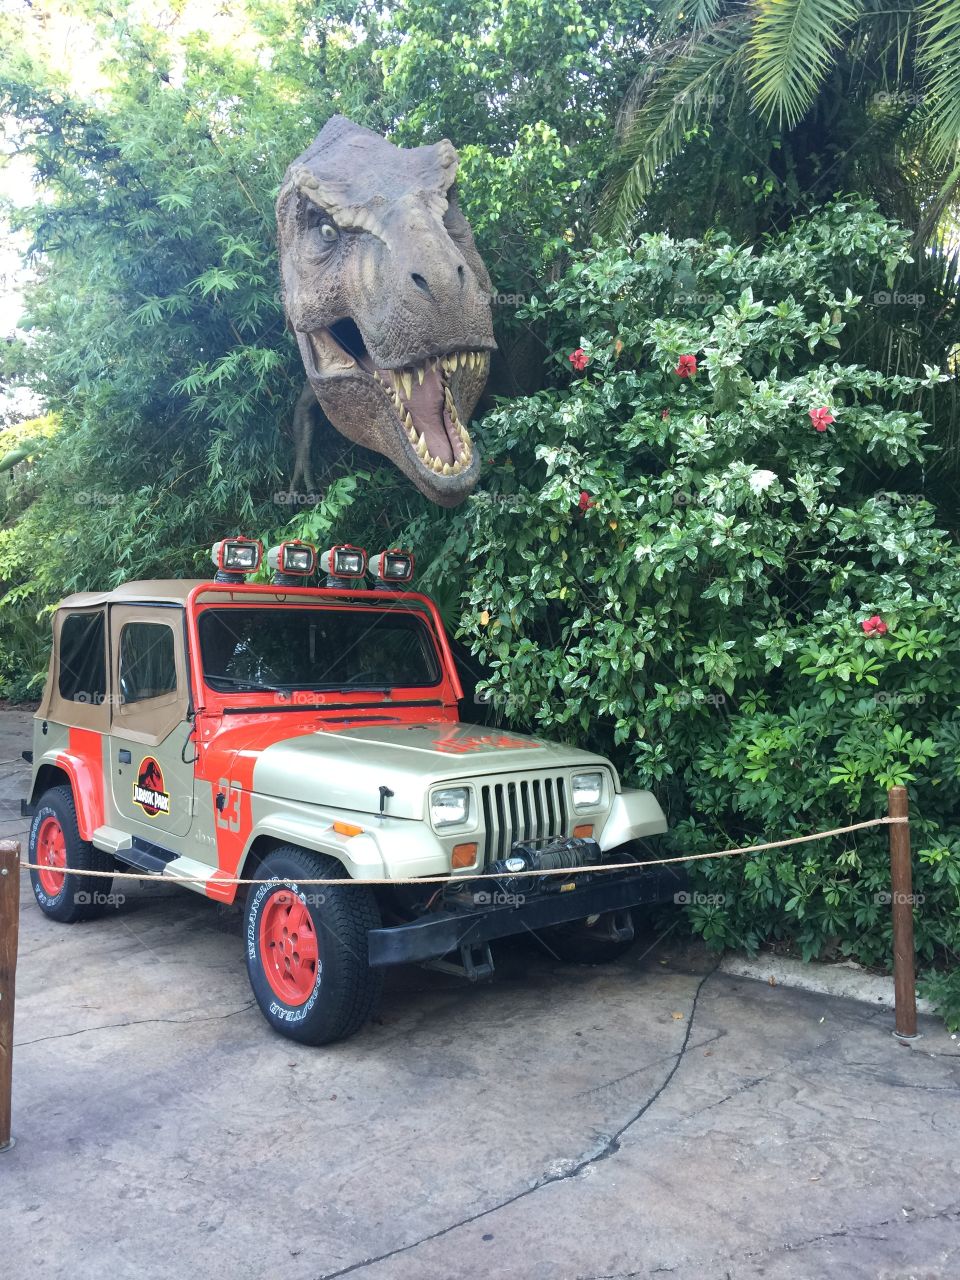 Jurassic Park world at islands of adventure in Orlando 